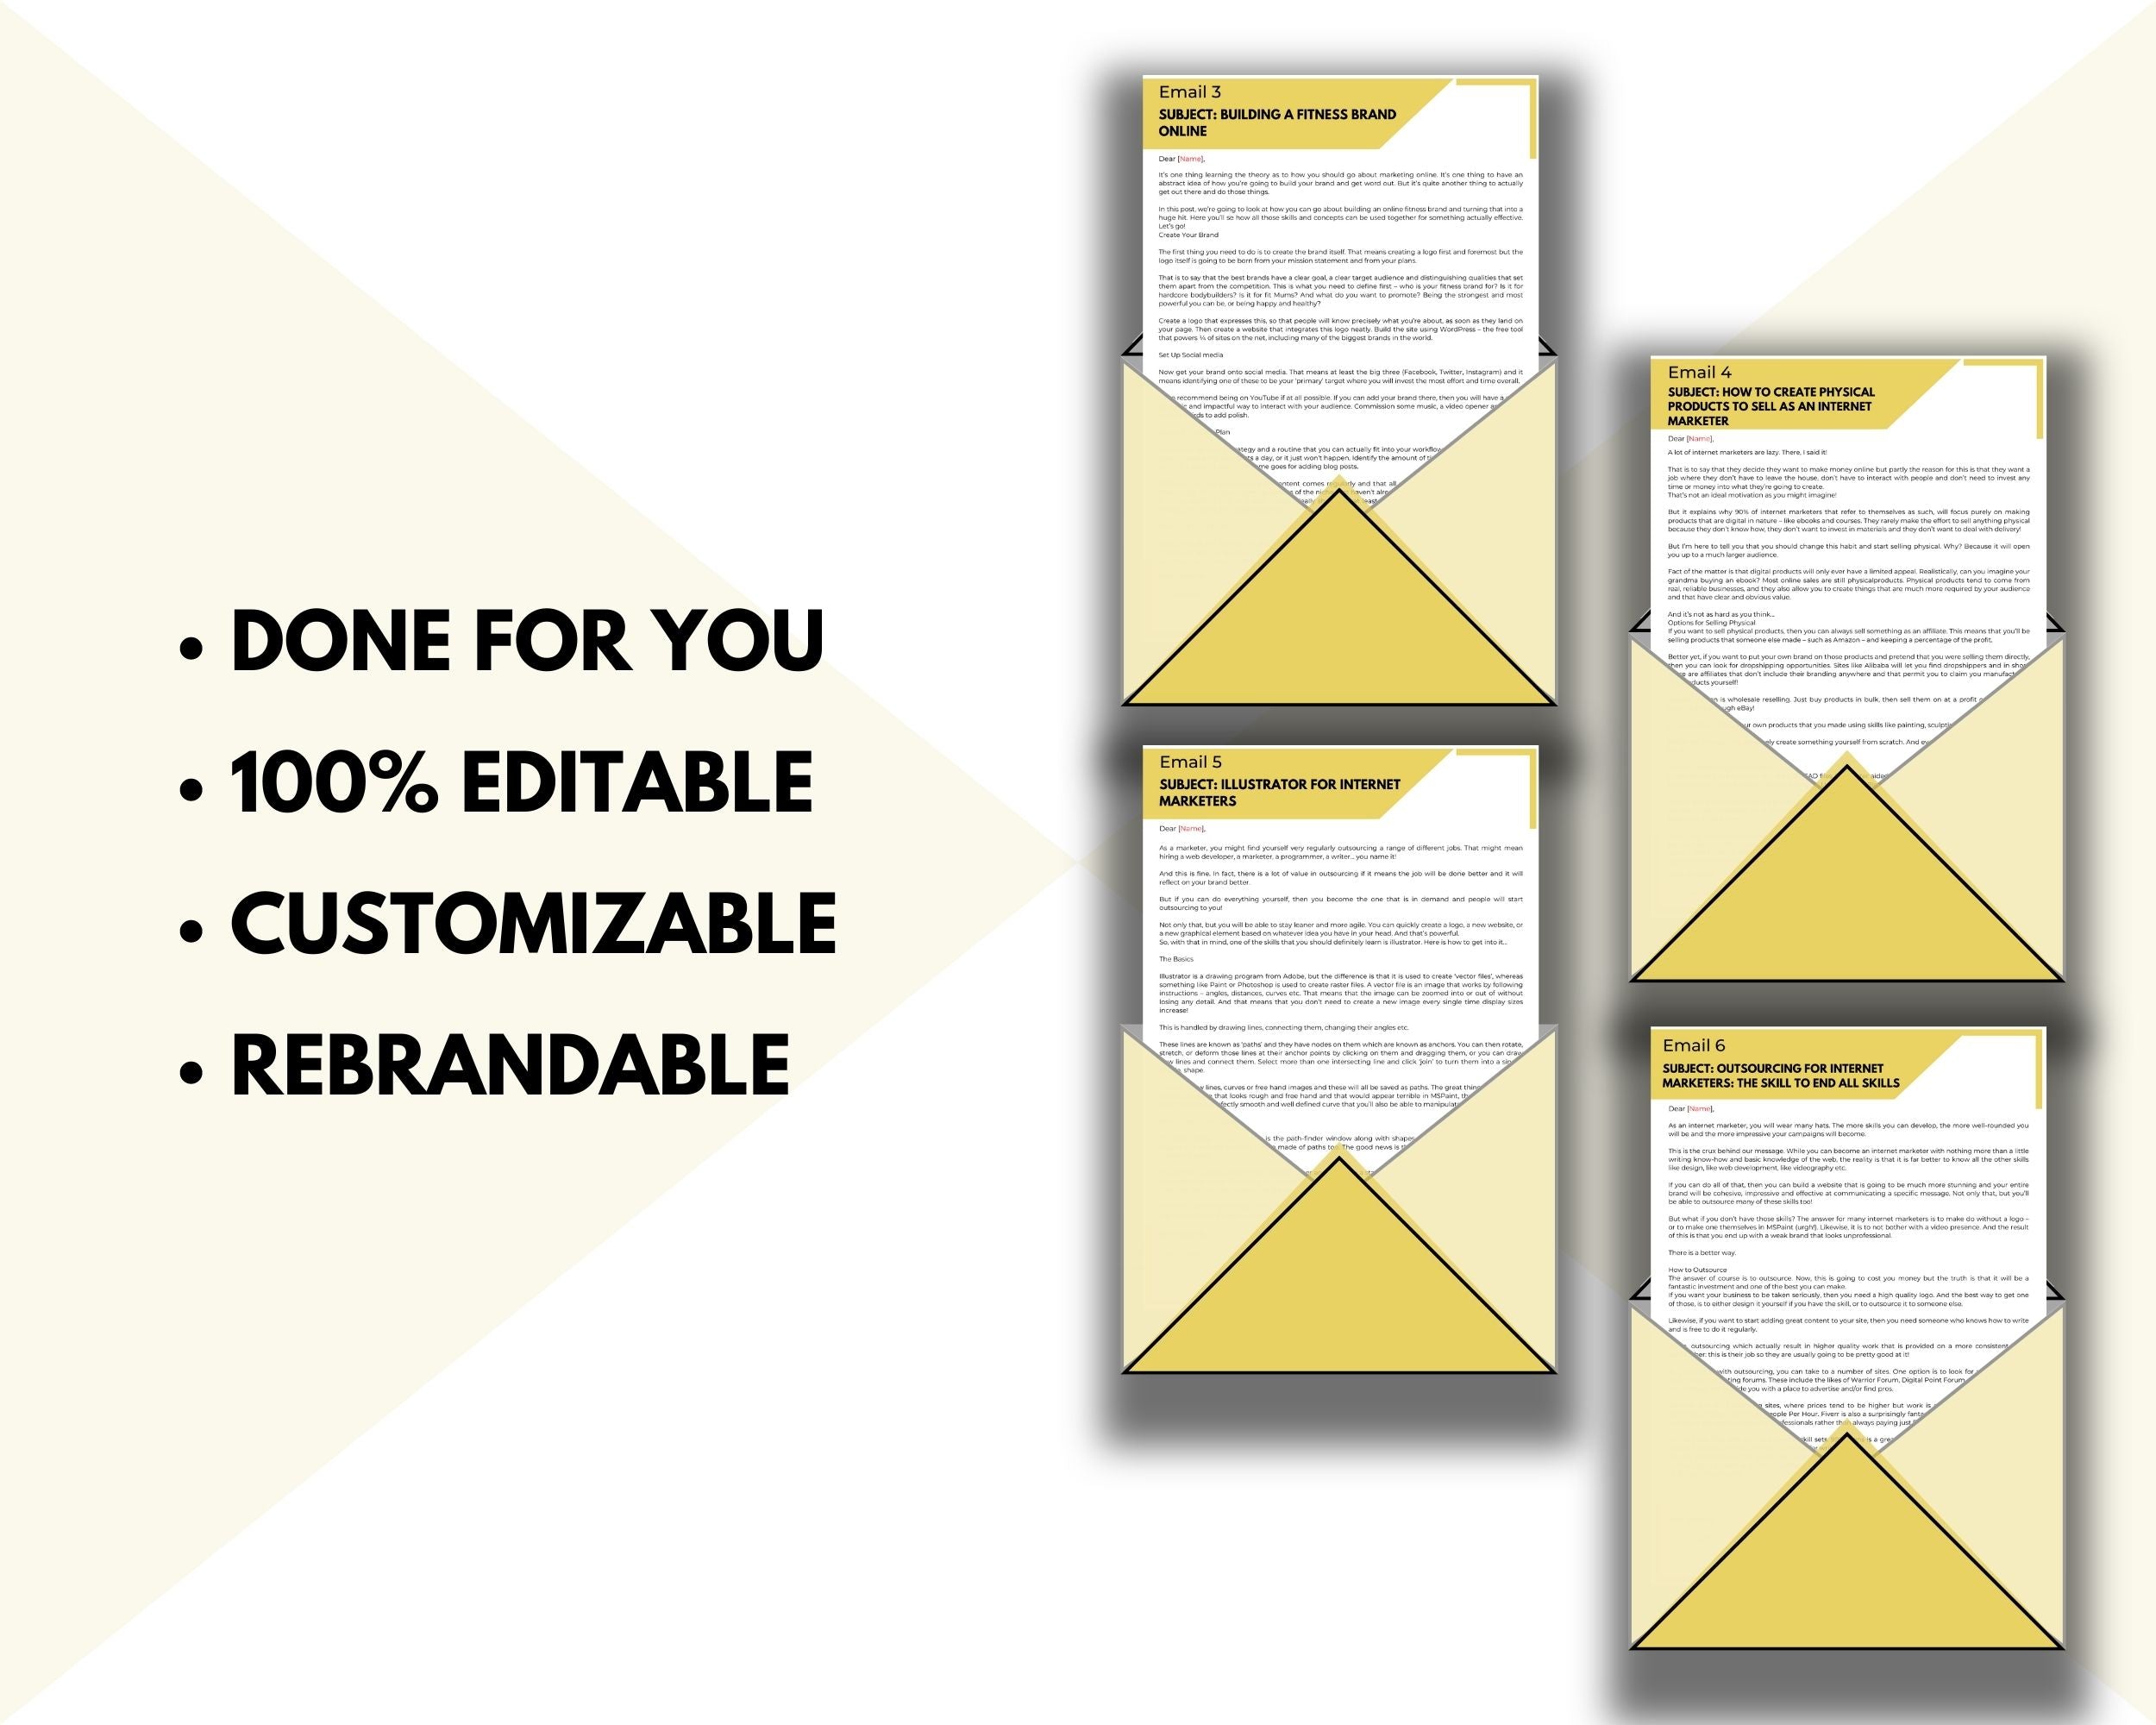 Editable 10 Day Digital Marketers Toolkit Emails | Rebrandable Newsletter